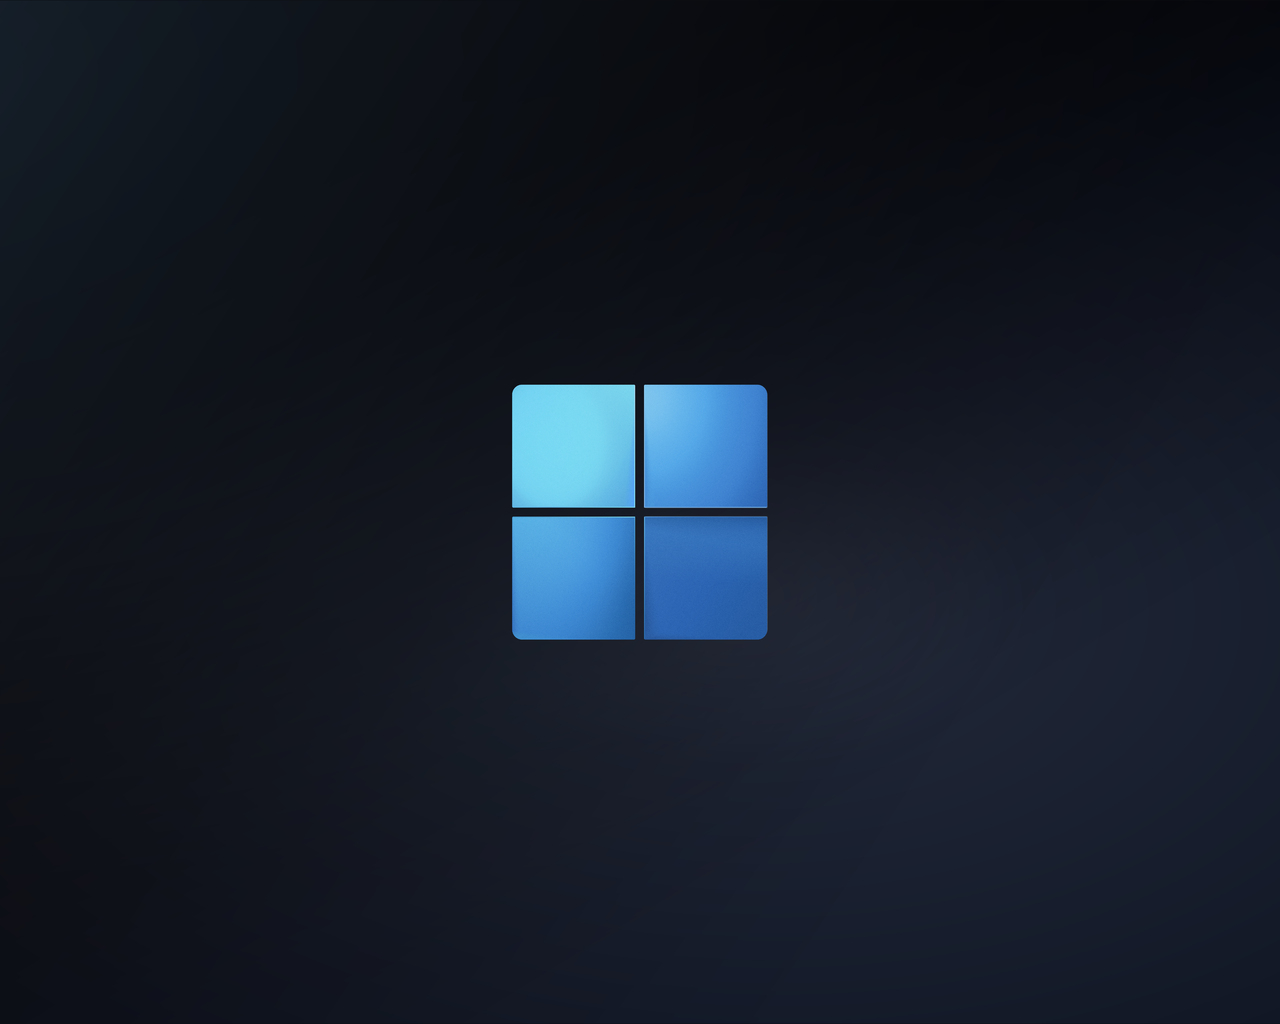 Win 11 game. Windows 11 logo. Windows 11 icon. Картинки Windows 11. Обои Windows 10.